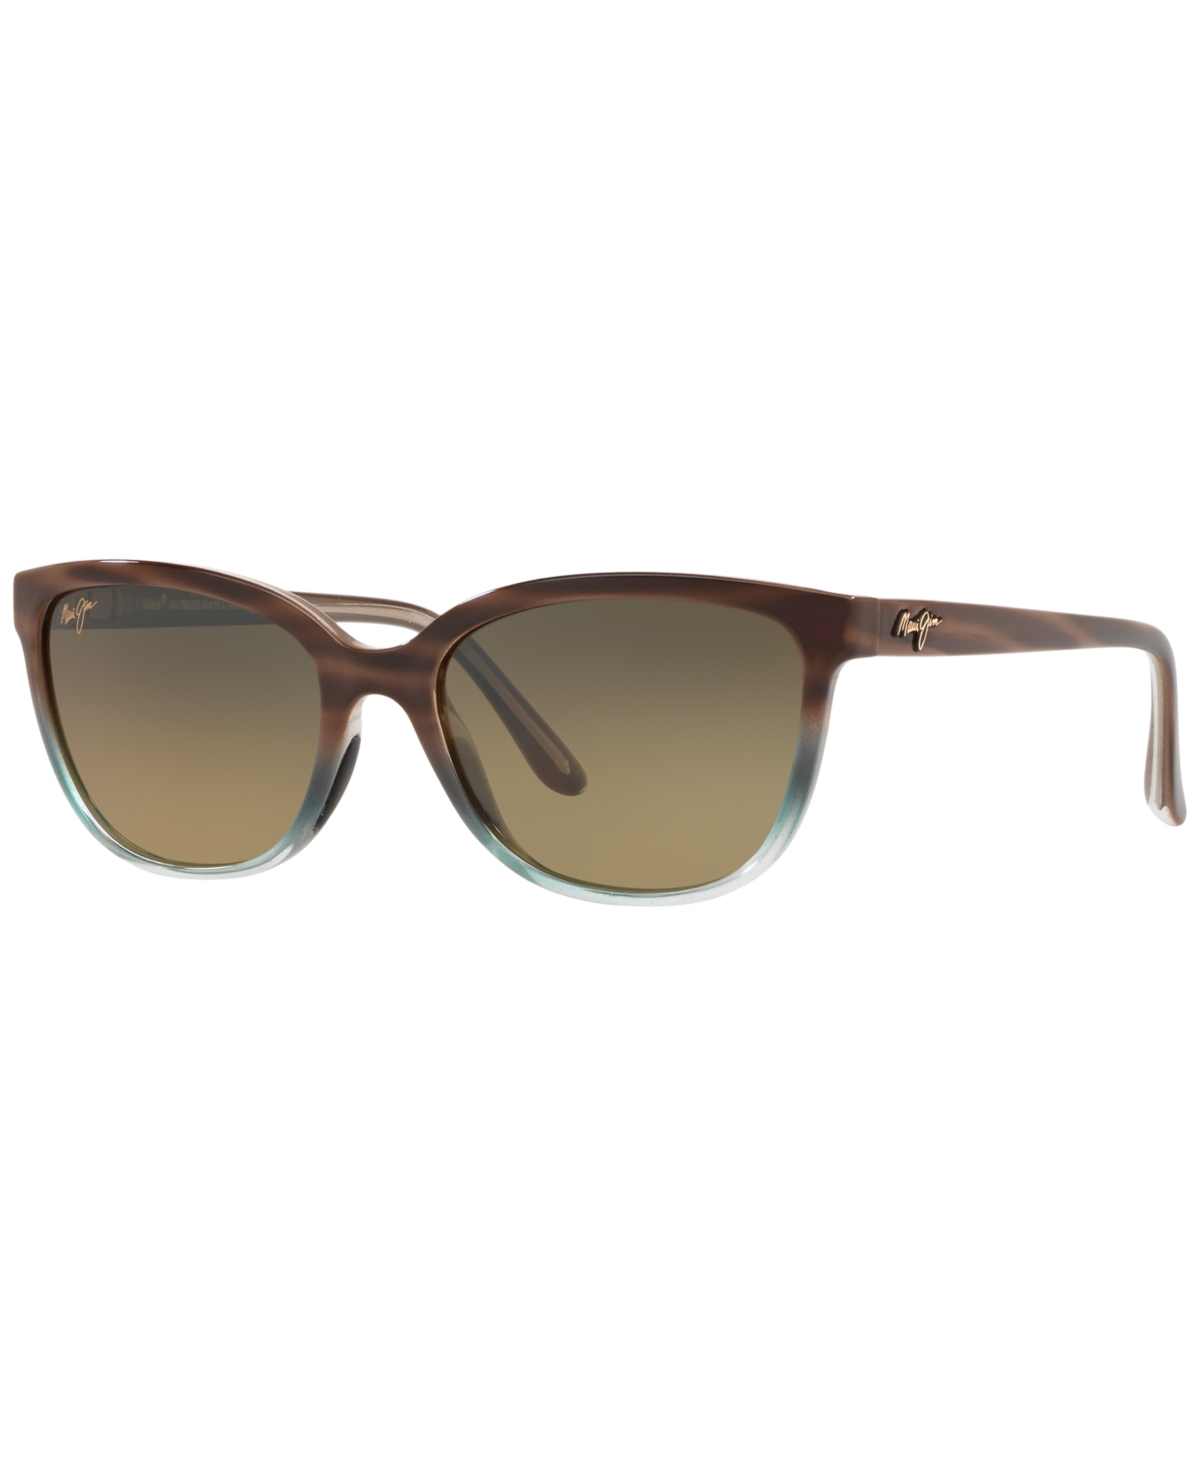 Women's Polarized Sunglasses, 758 Honi - BROWN BLUE/BRONZE POLAR